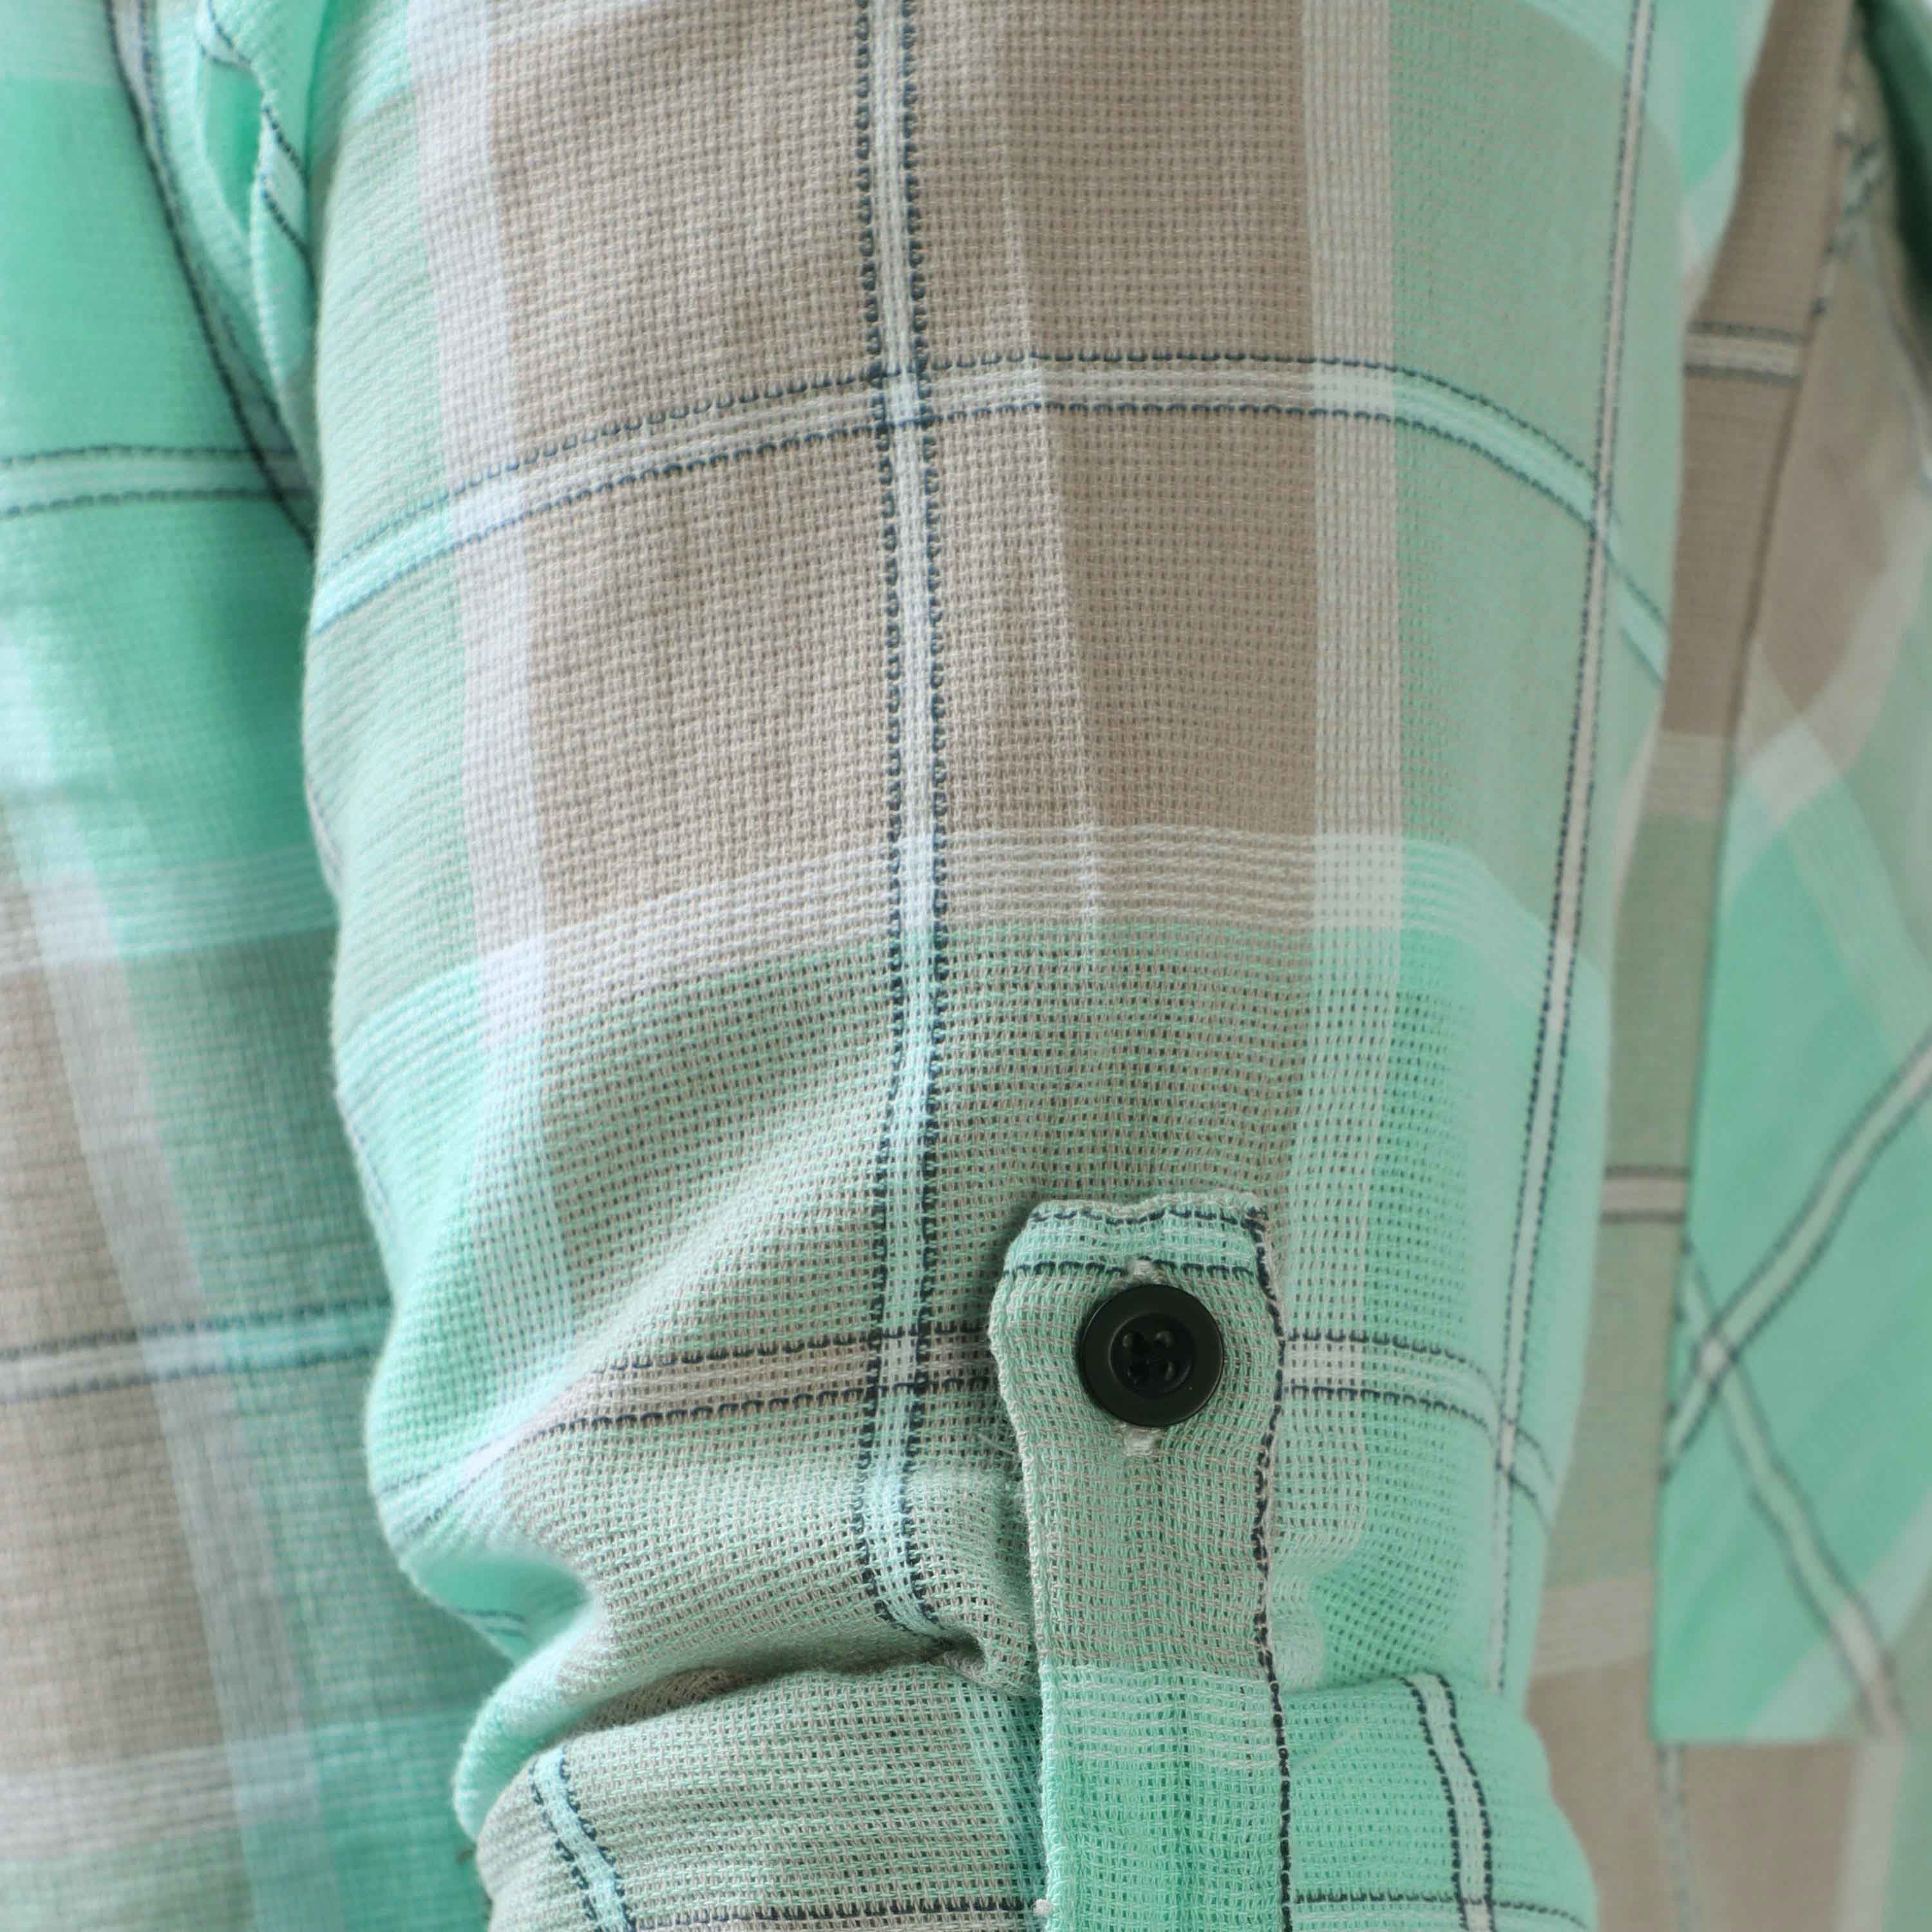 Buy Seafoam Green and Light Brown Linen Check Shirt MensRs. 1399.00